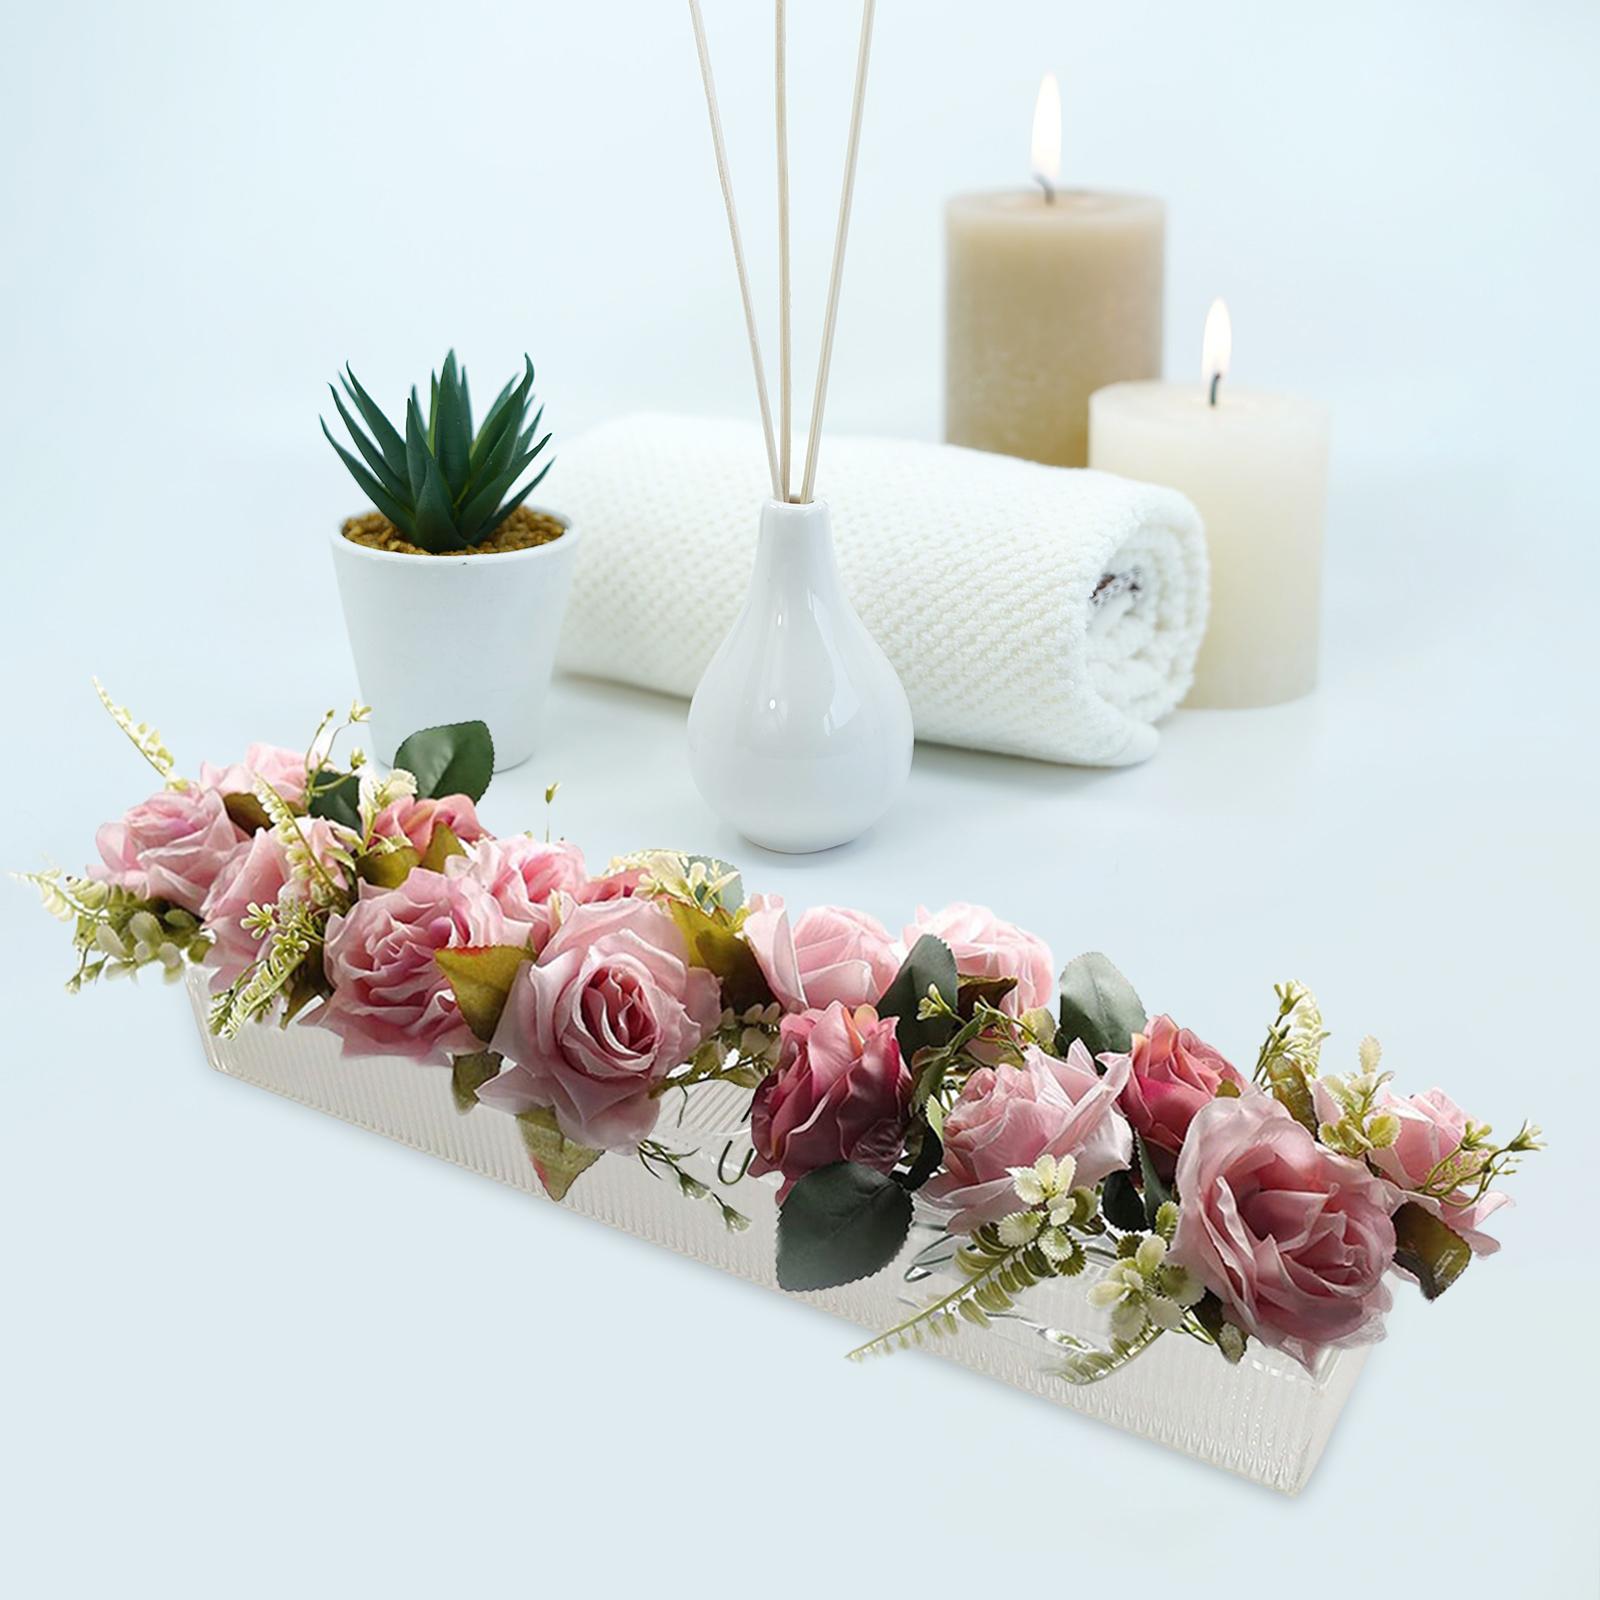 Acrylic Flower Vase Centerpiece Shelf Long Decorations with Vertical Stripes 45x10x6.5cm